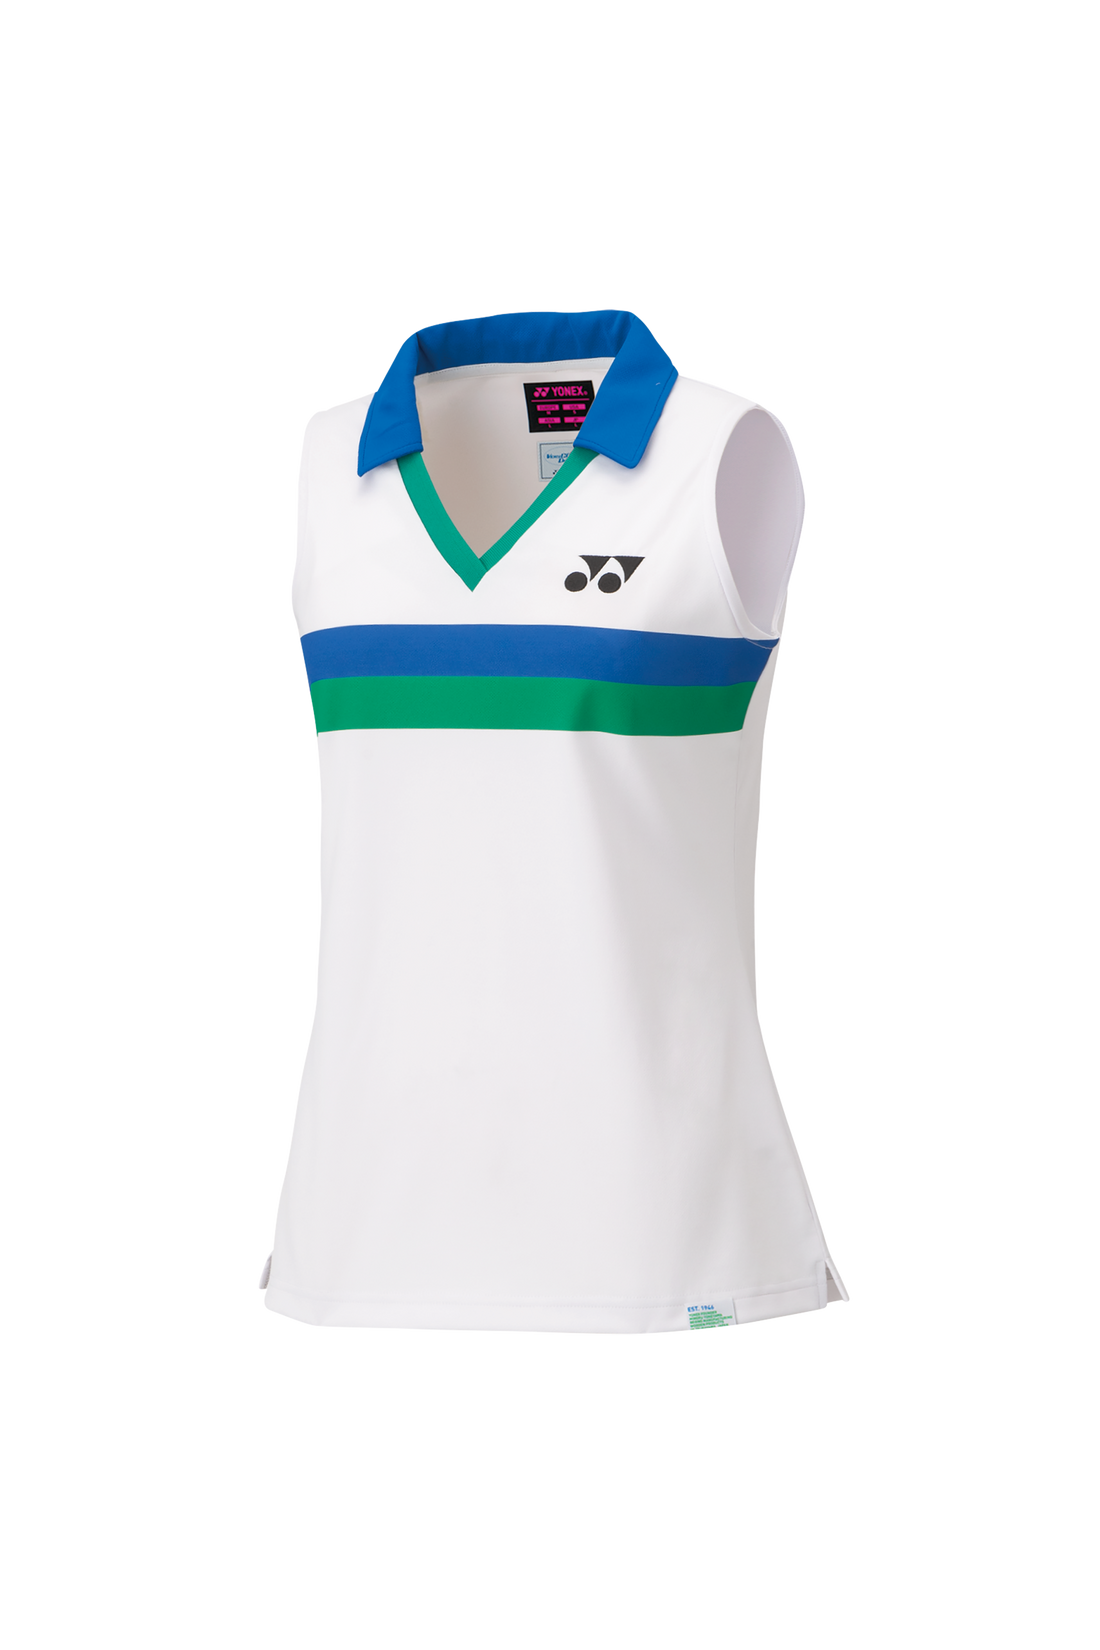 Yonex 75th Women's Sleeveless Polo Shirt 20627A [White]